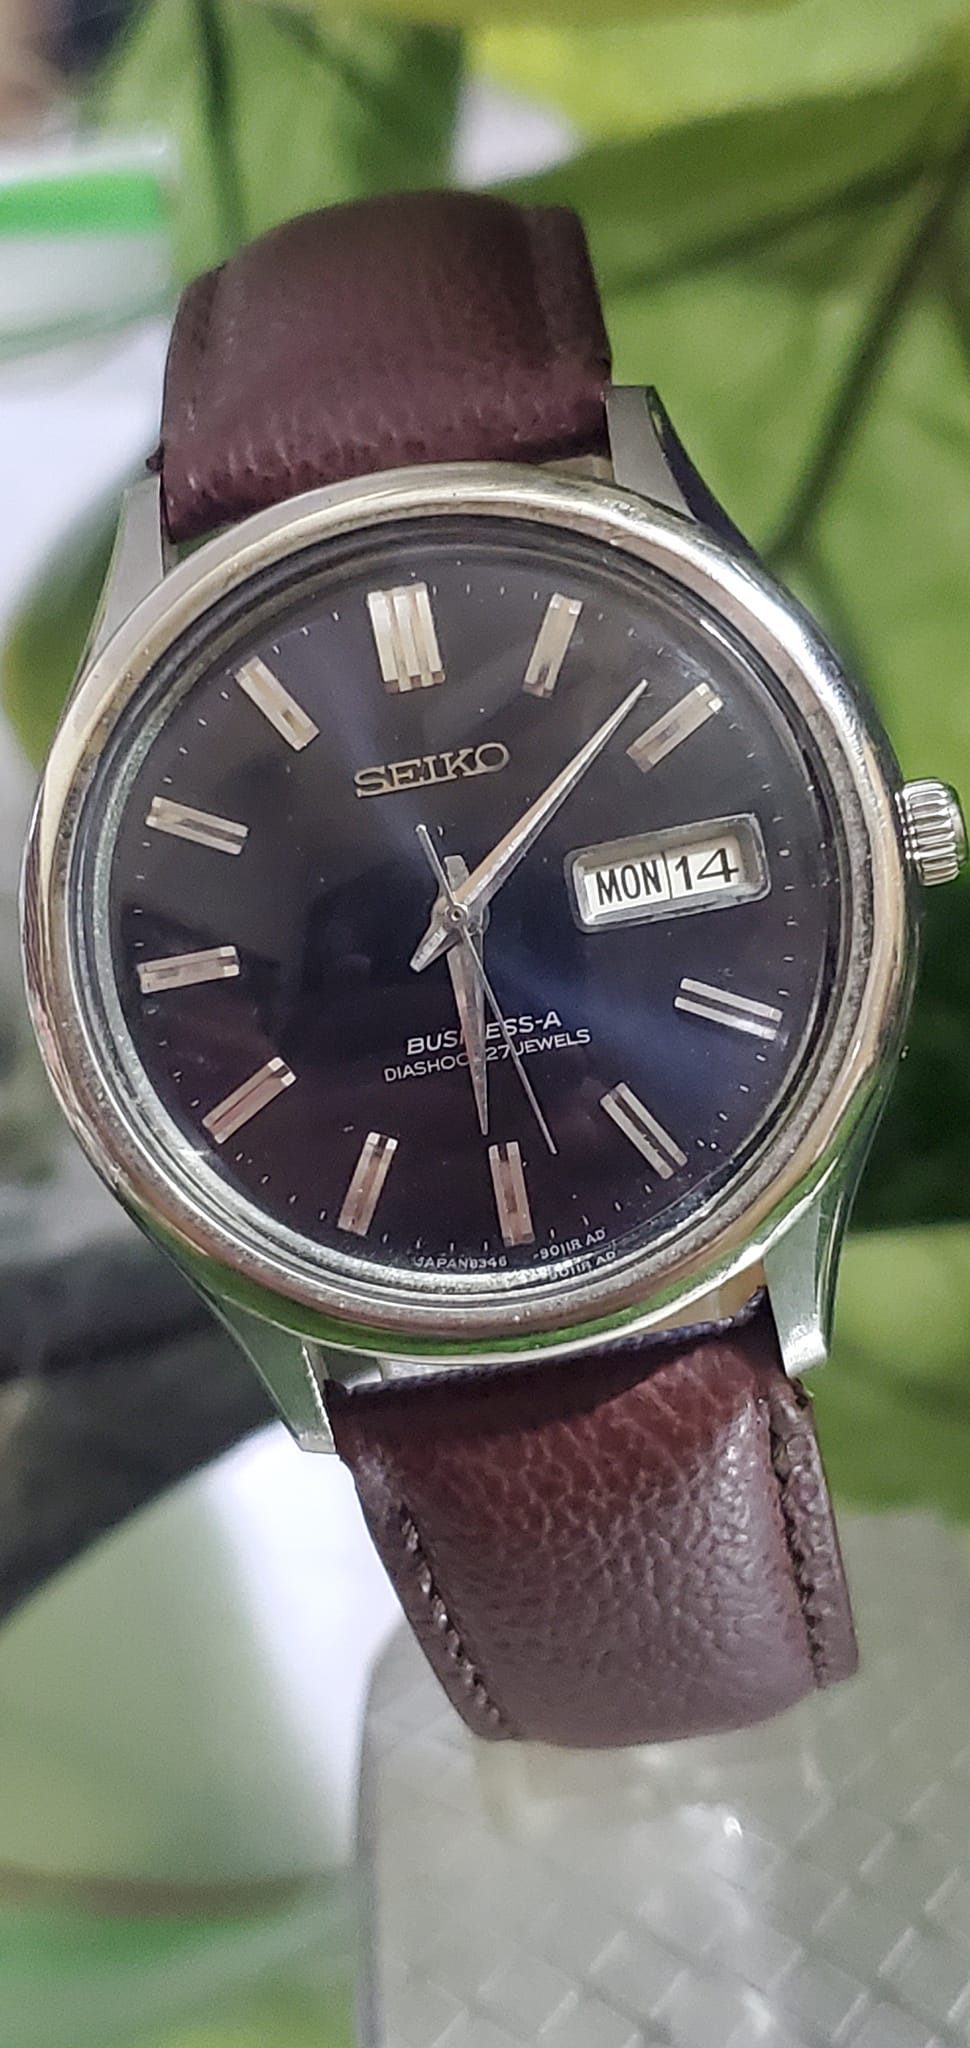 Ultra rare 1967 Seiko Business-A Diashock 27 Jewels Automatic 8346-8001 Mens Watch